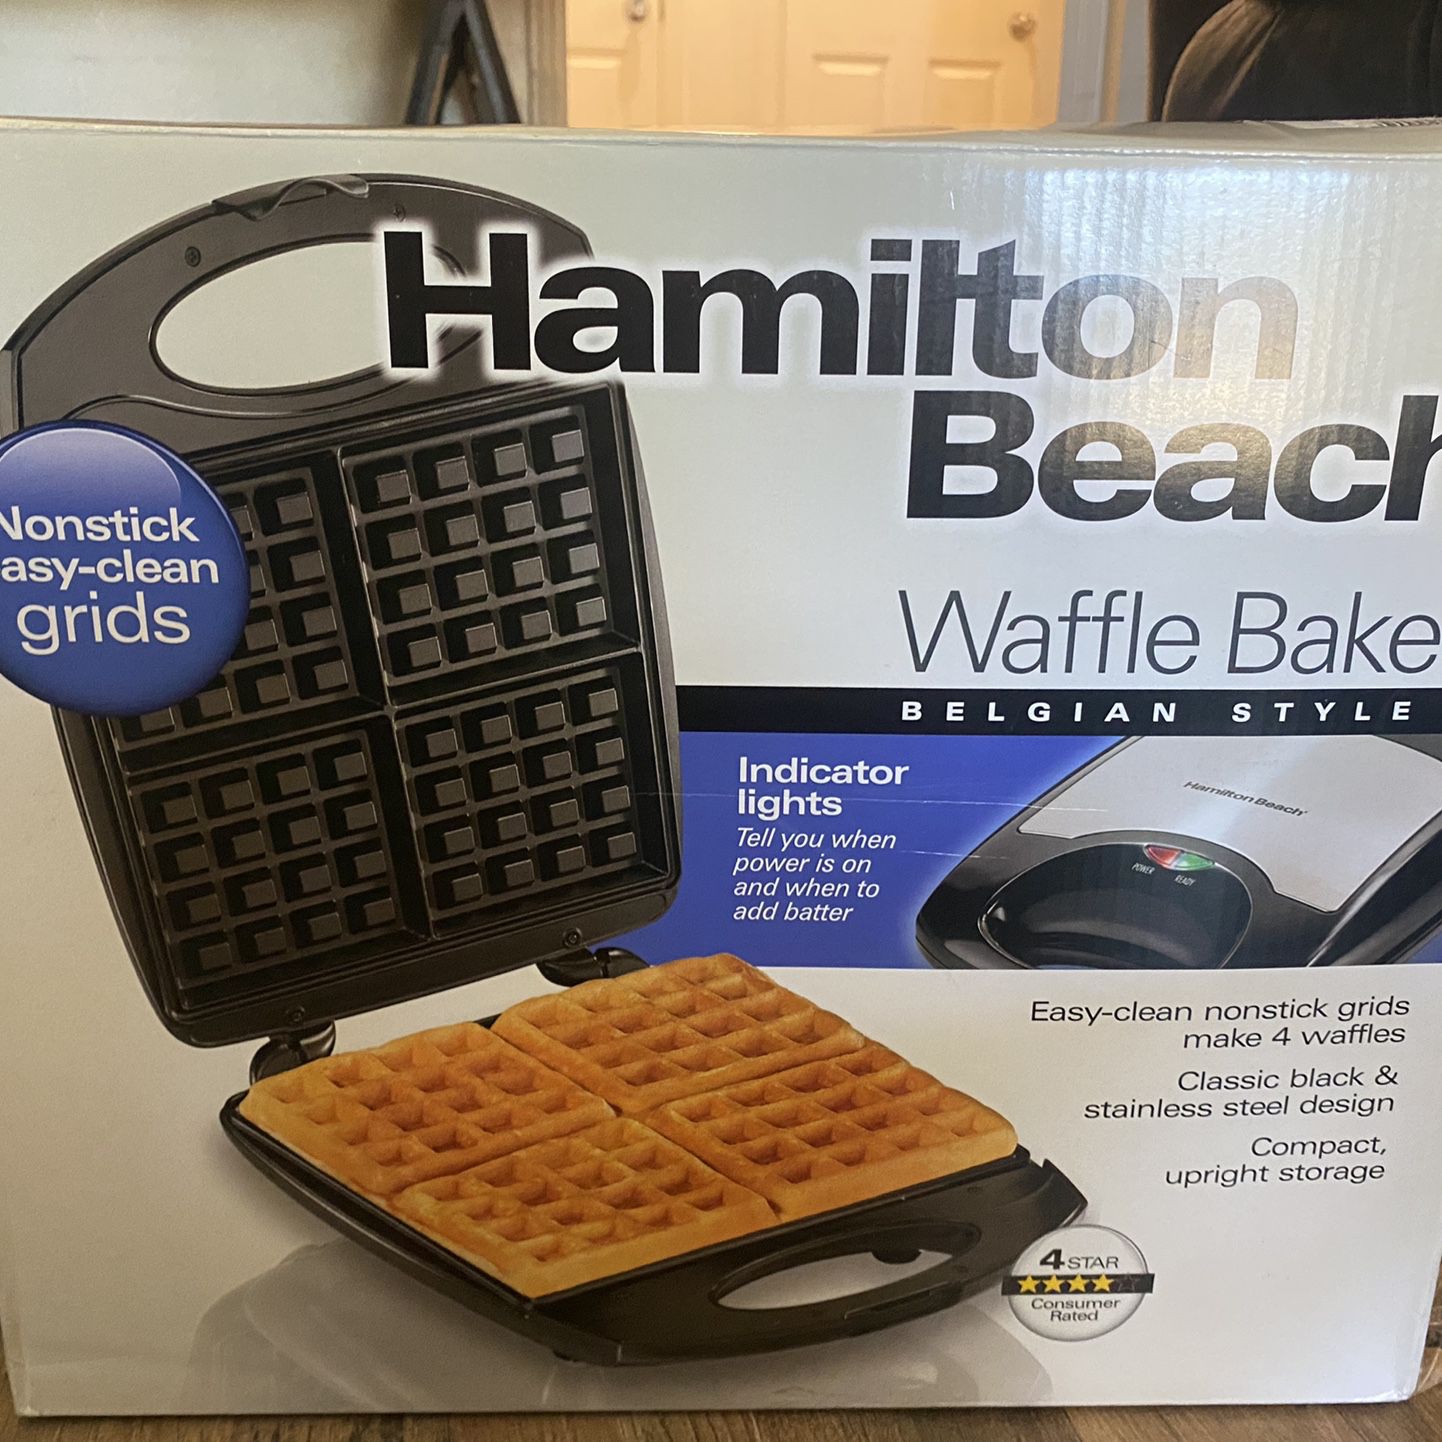 Hamilton Beach Belgian Waffle Maker